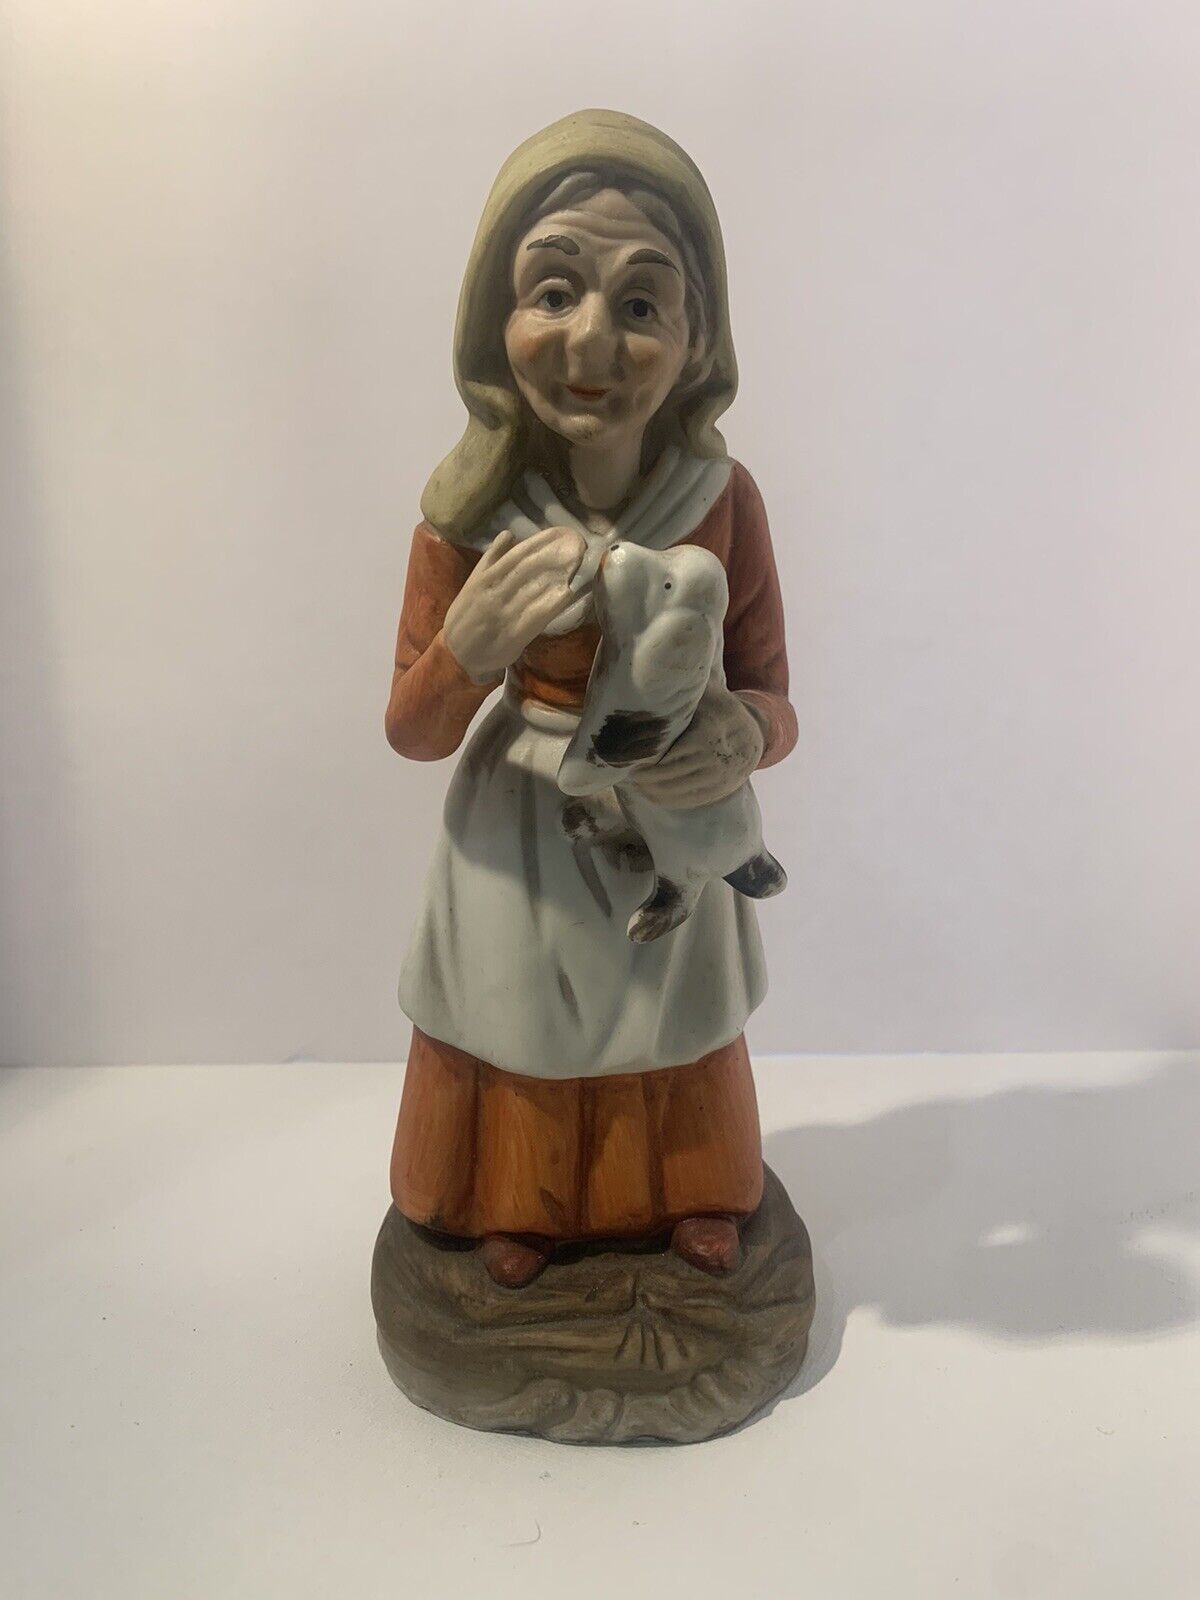 Vintage Porcelain Biscuit Figurine Old Woman Grandmother Dog 20th Century Europe